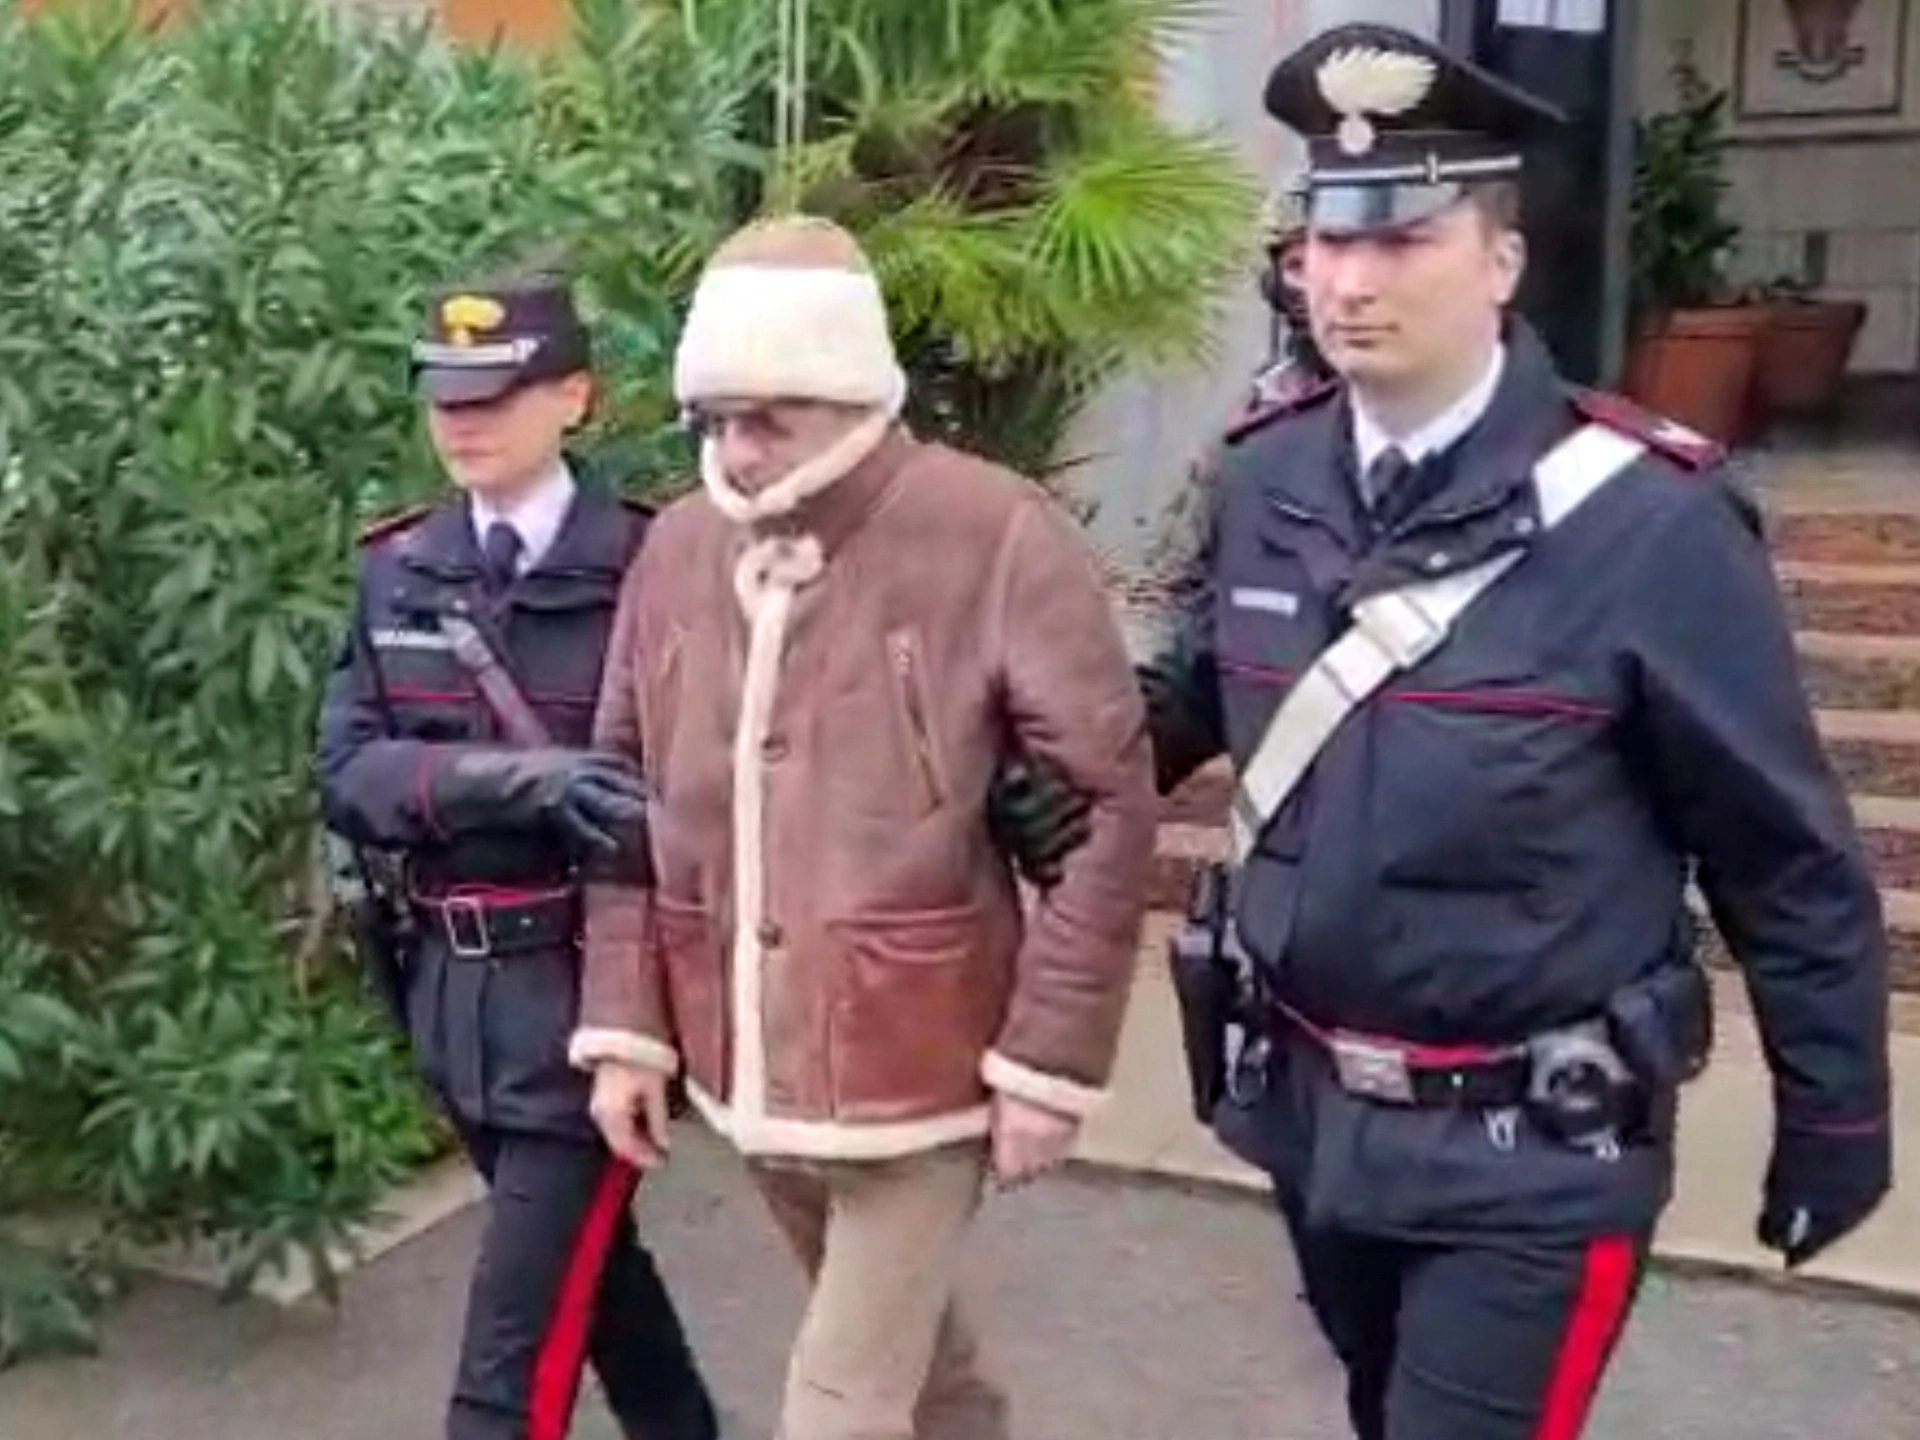 Italian Mafia Boss Matteo Messina Denaro arrested